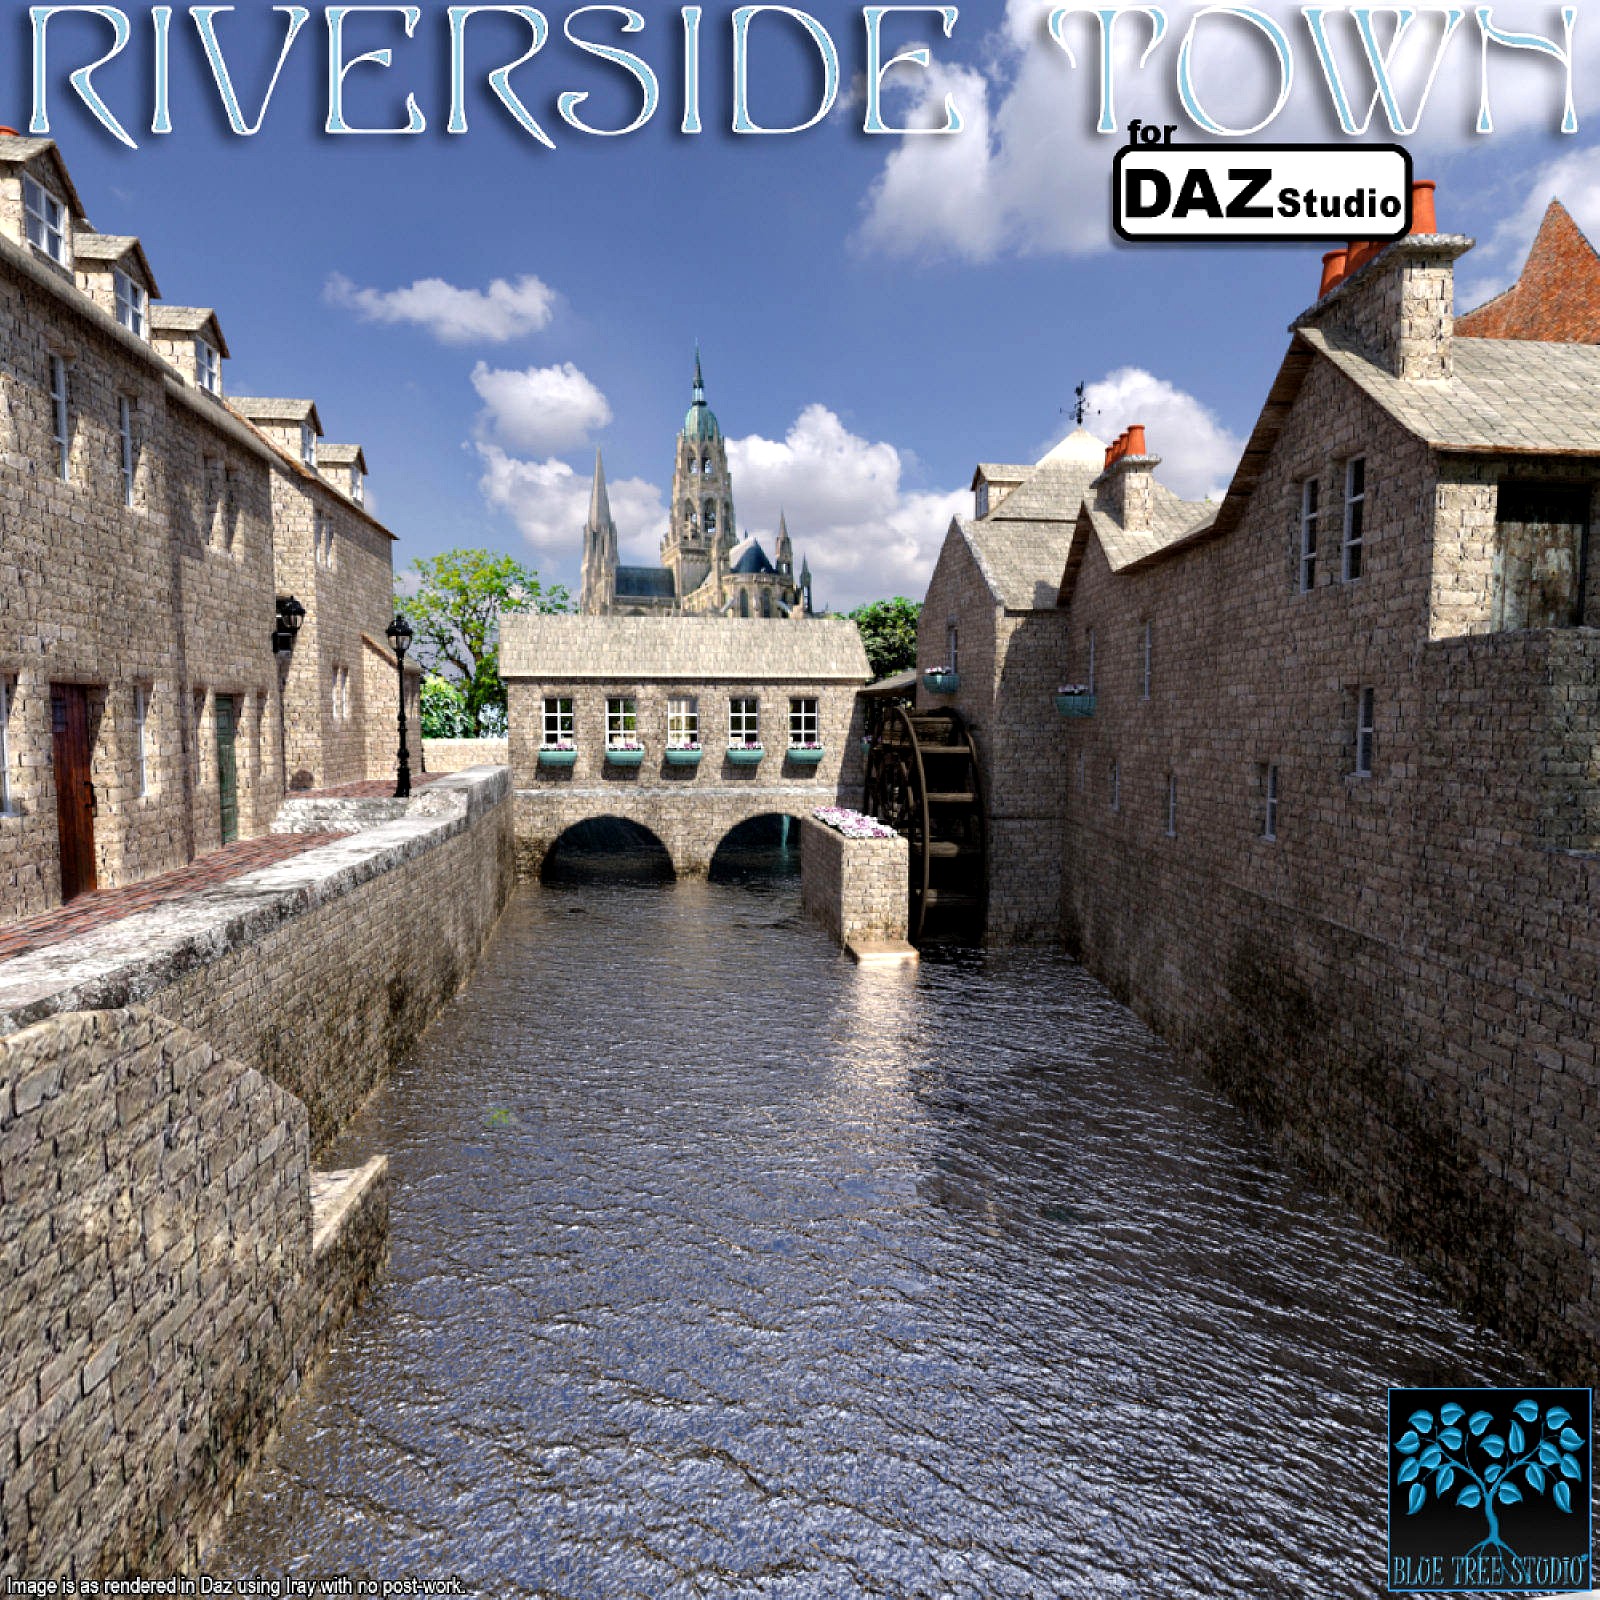 Riverside Town for Daz Studio